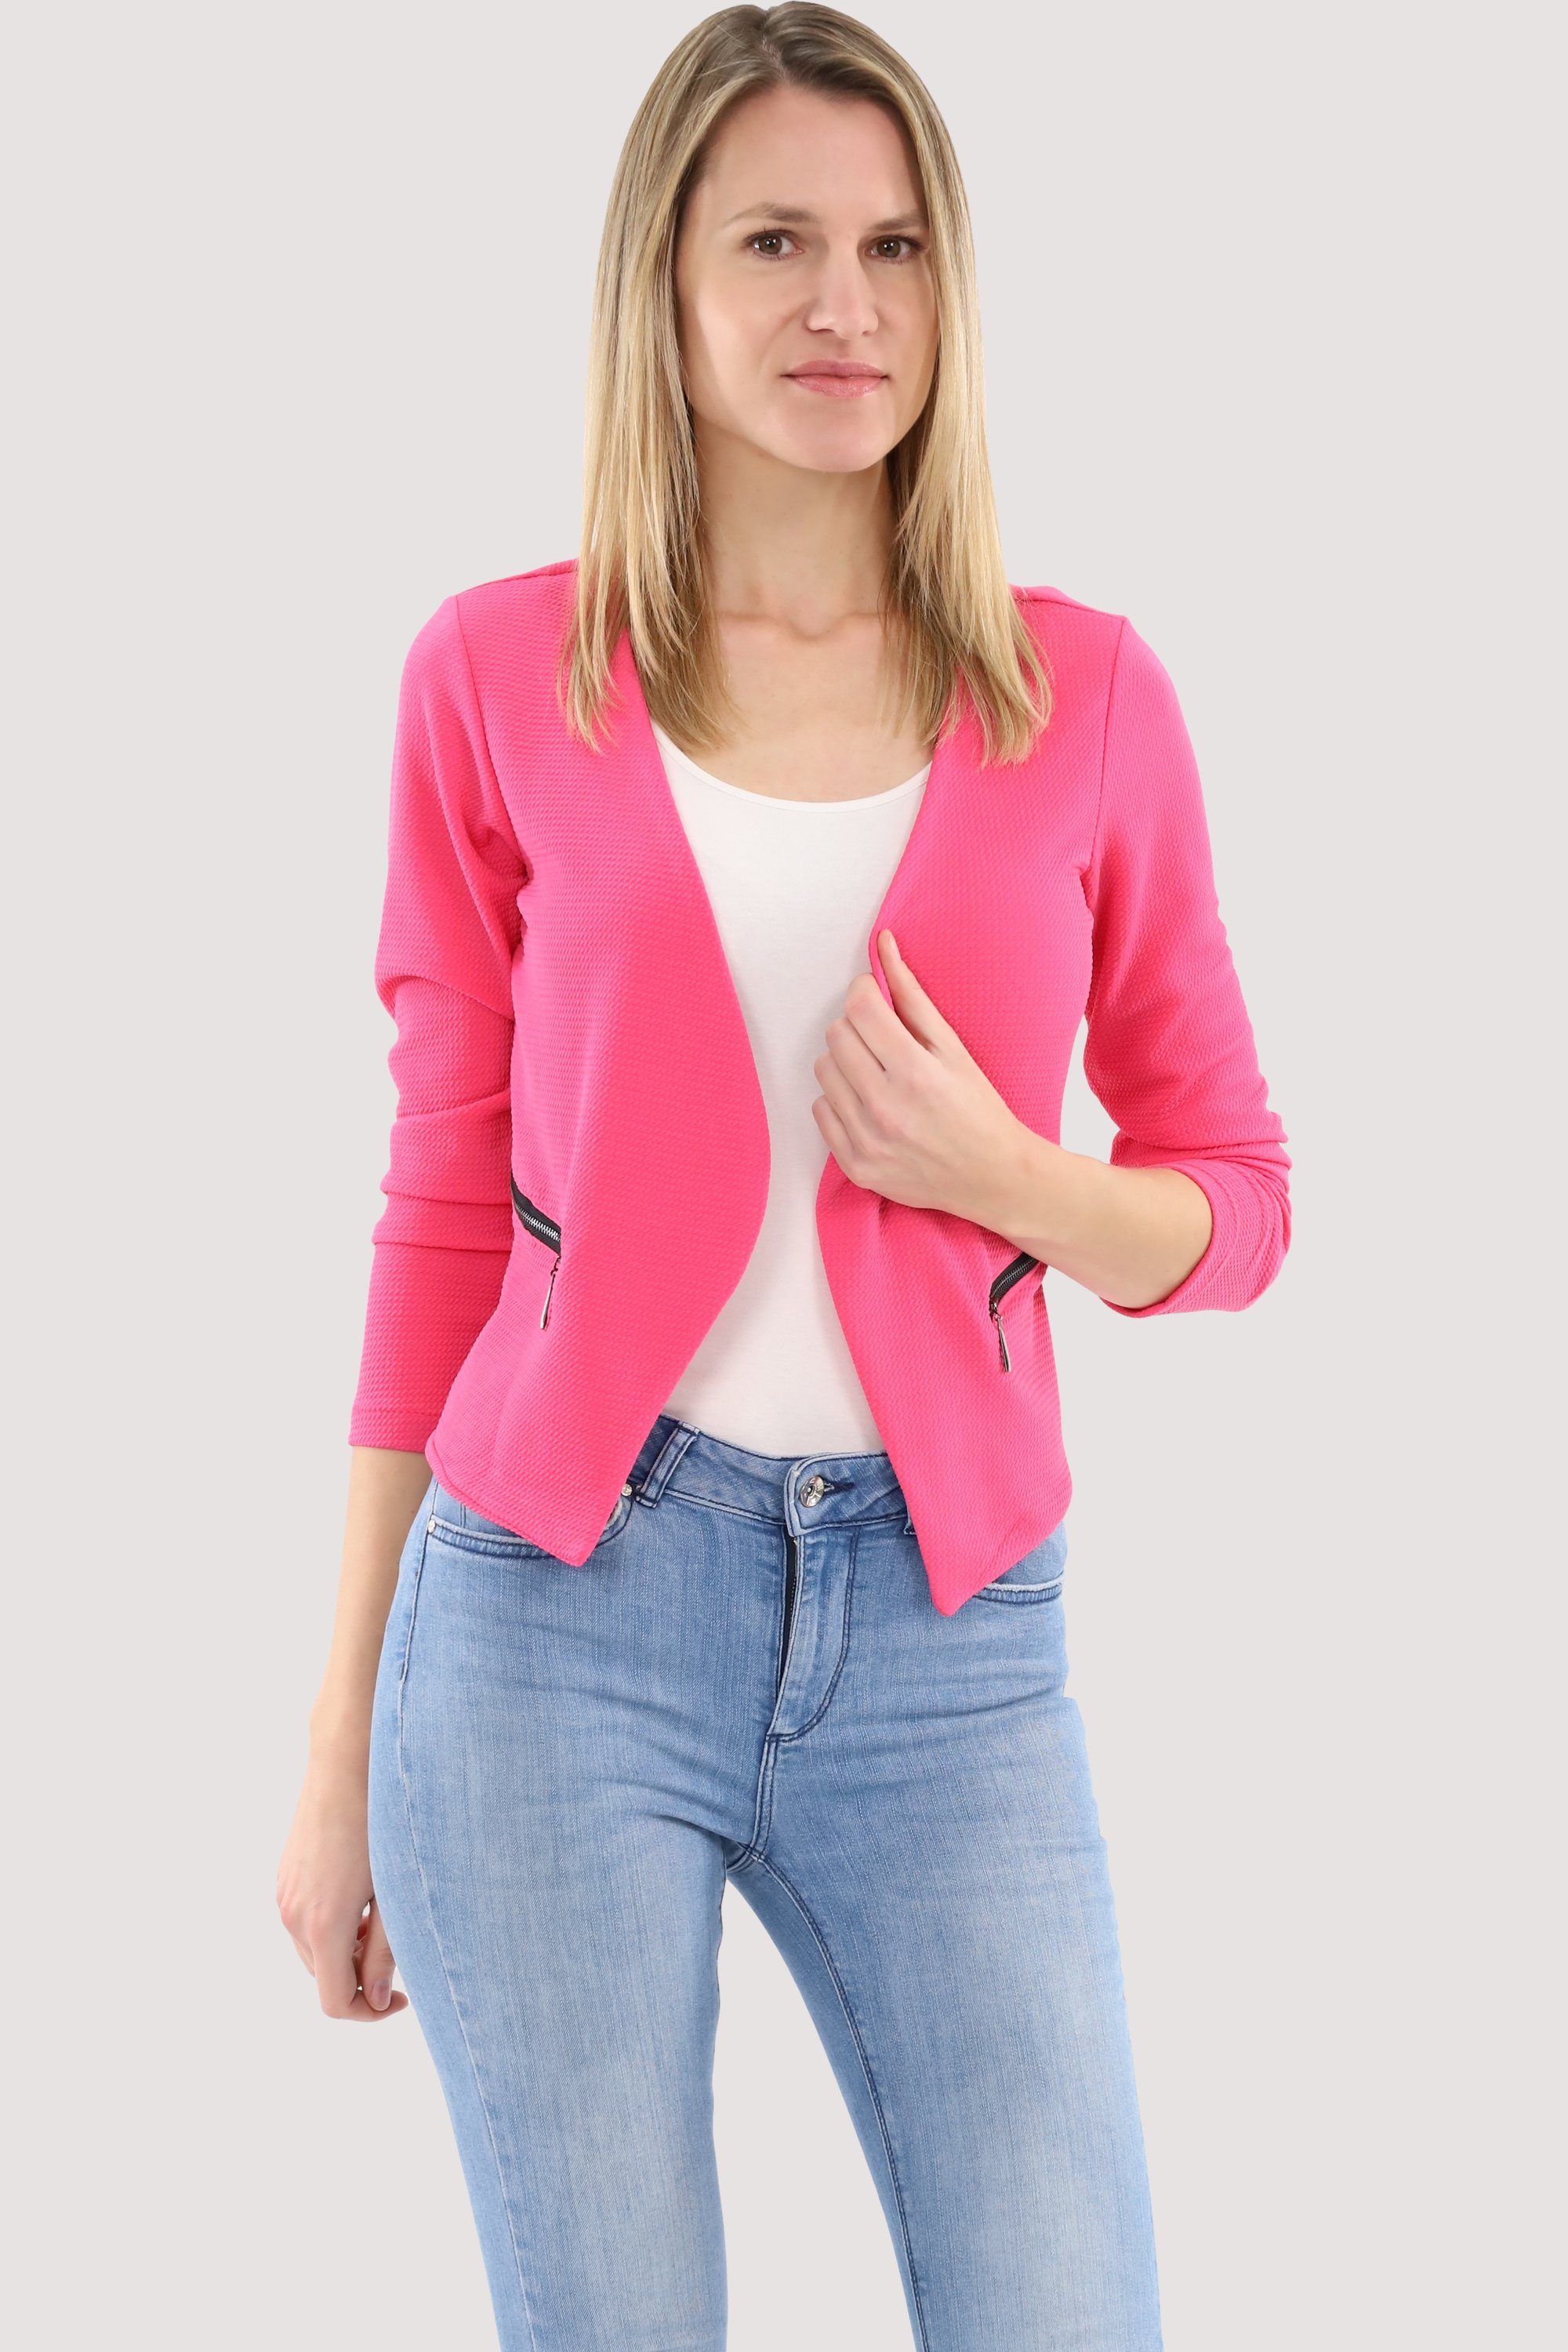 fashion more than Basic-Look malito 6040 im pink Jackenblazer Sweatblazer